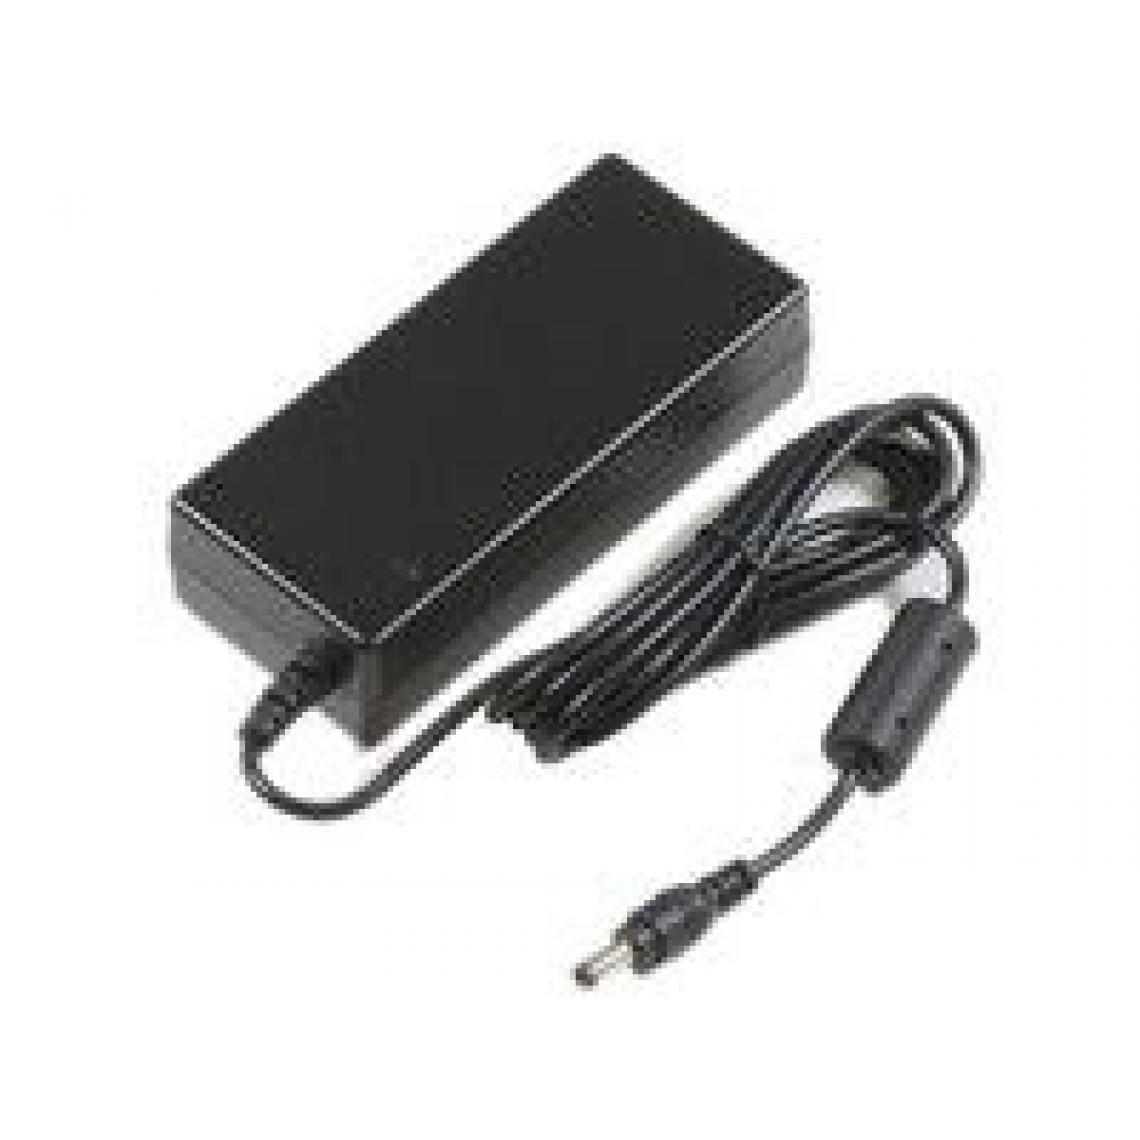 Inconnu - 19V 4.74A 90W Plug: 5.5*2.5 AC Adapter for BenQ **including power cord** - Chargeur secteur téléphone